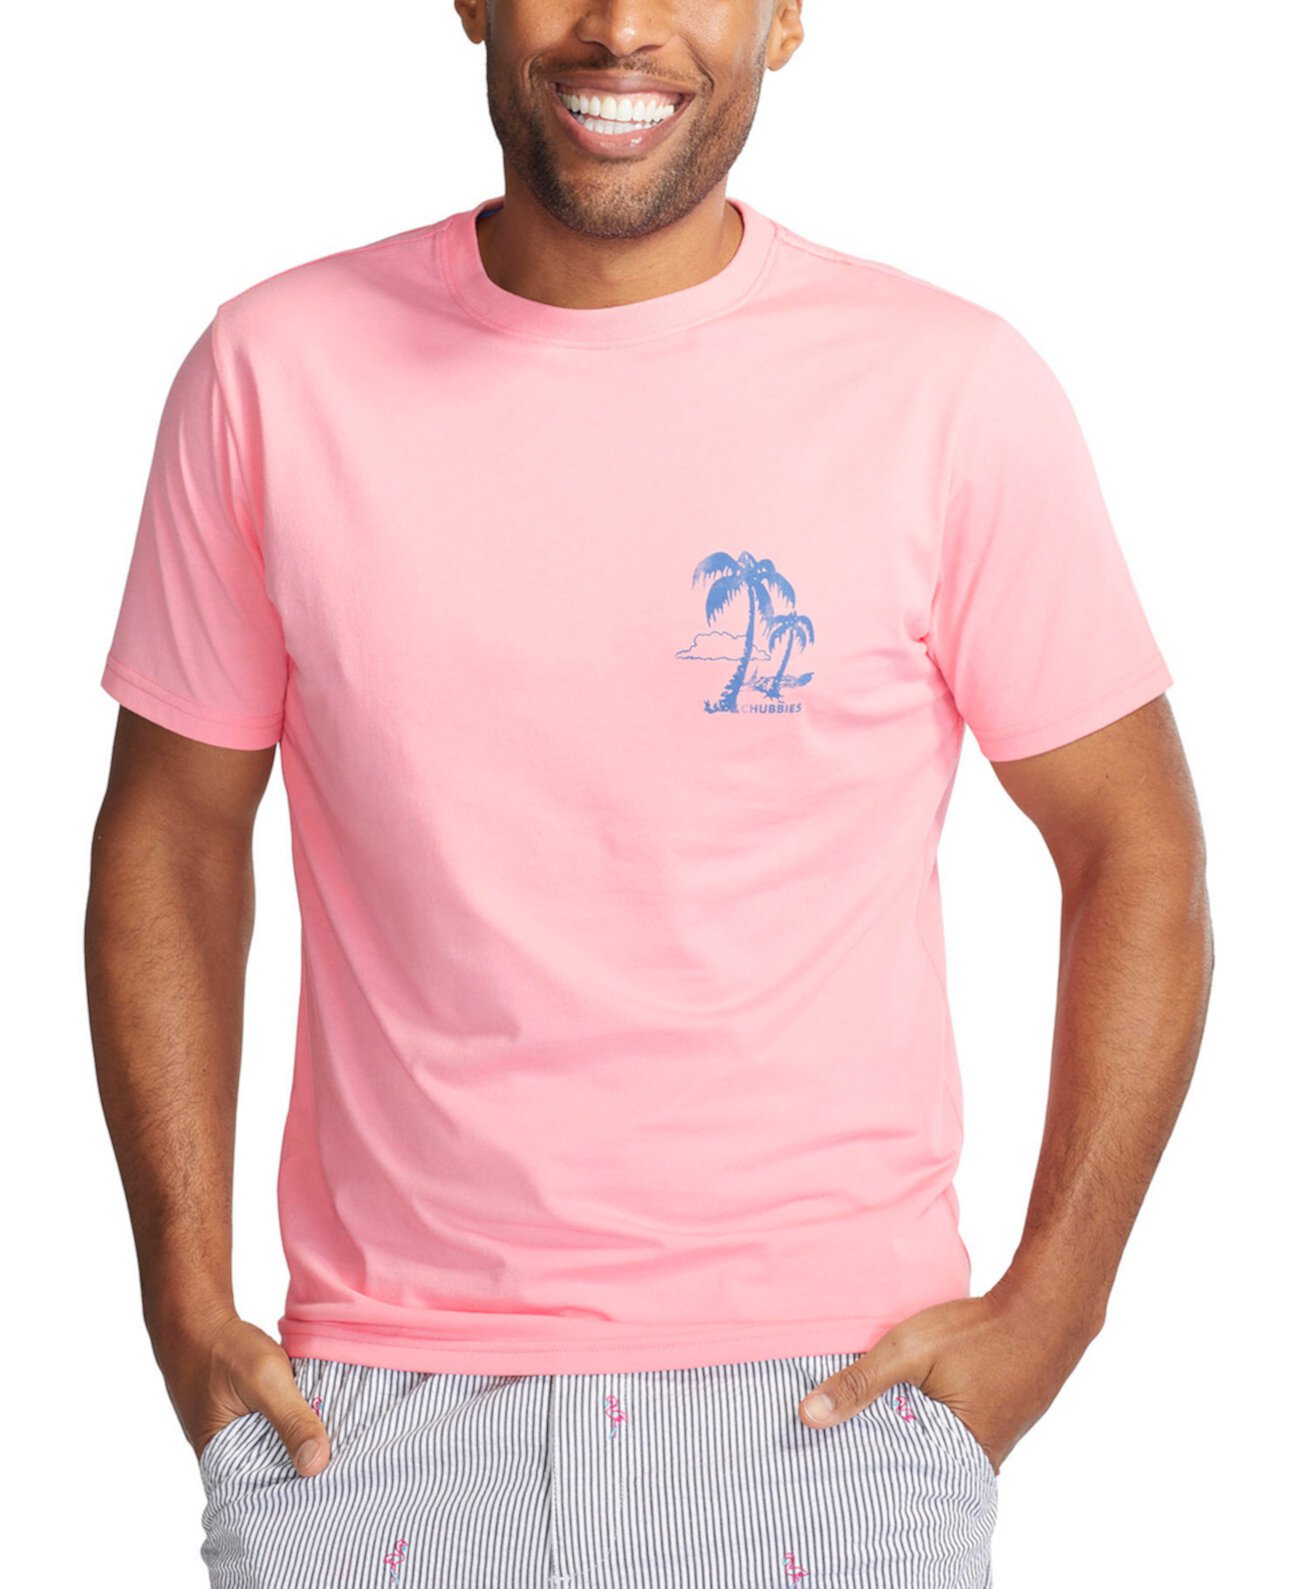 Мужская футболка свободного кроя с логотипом The Relaxer CHUBBIES